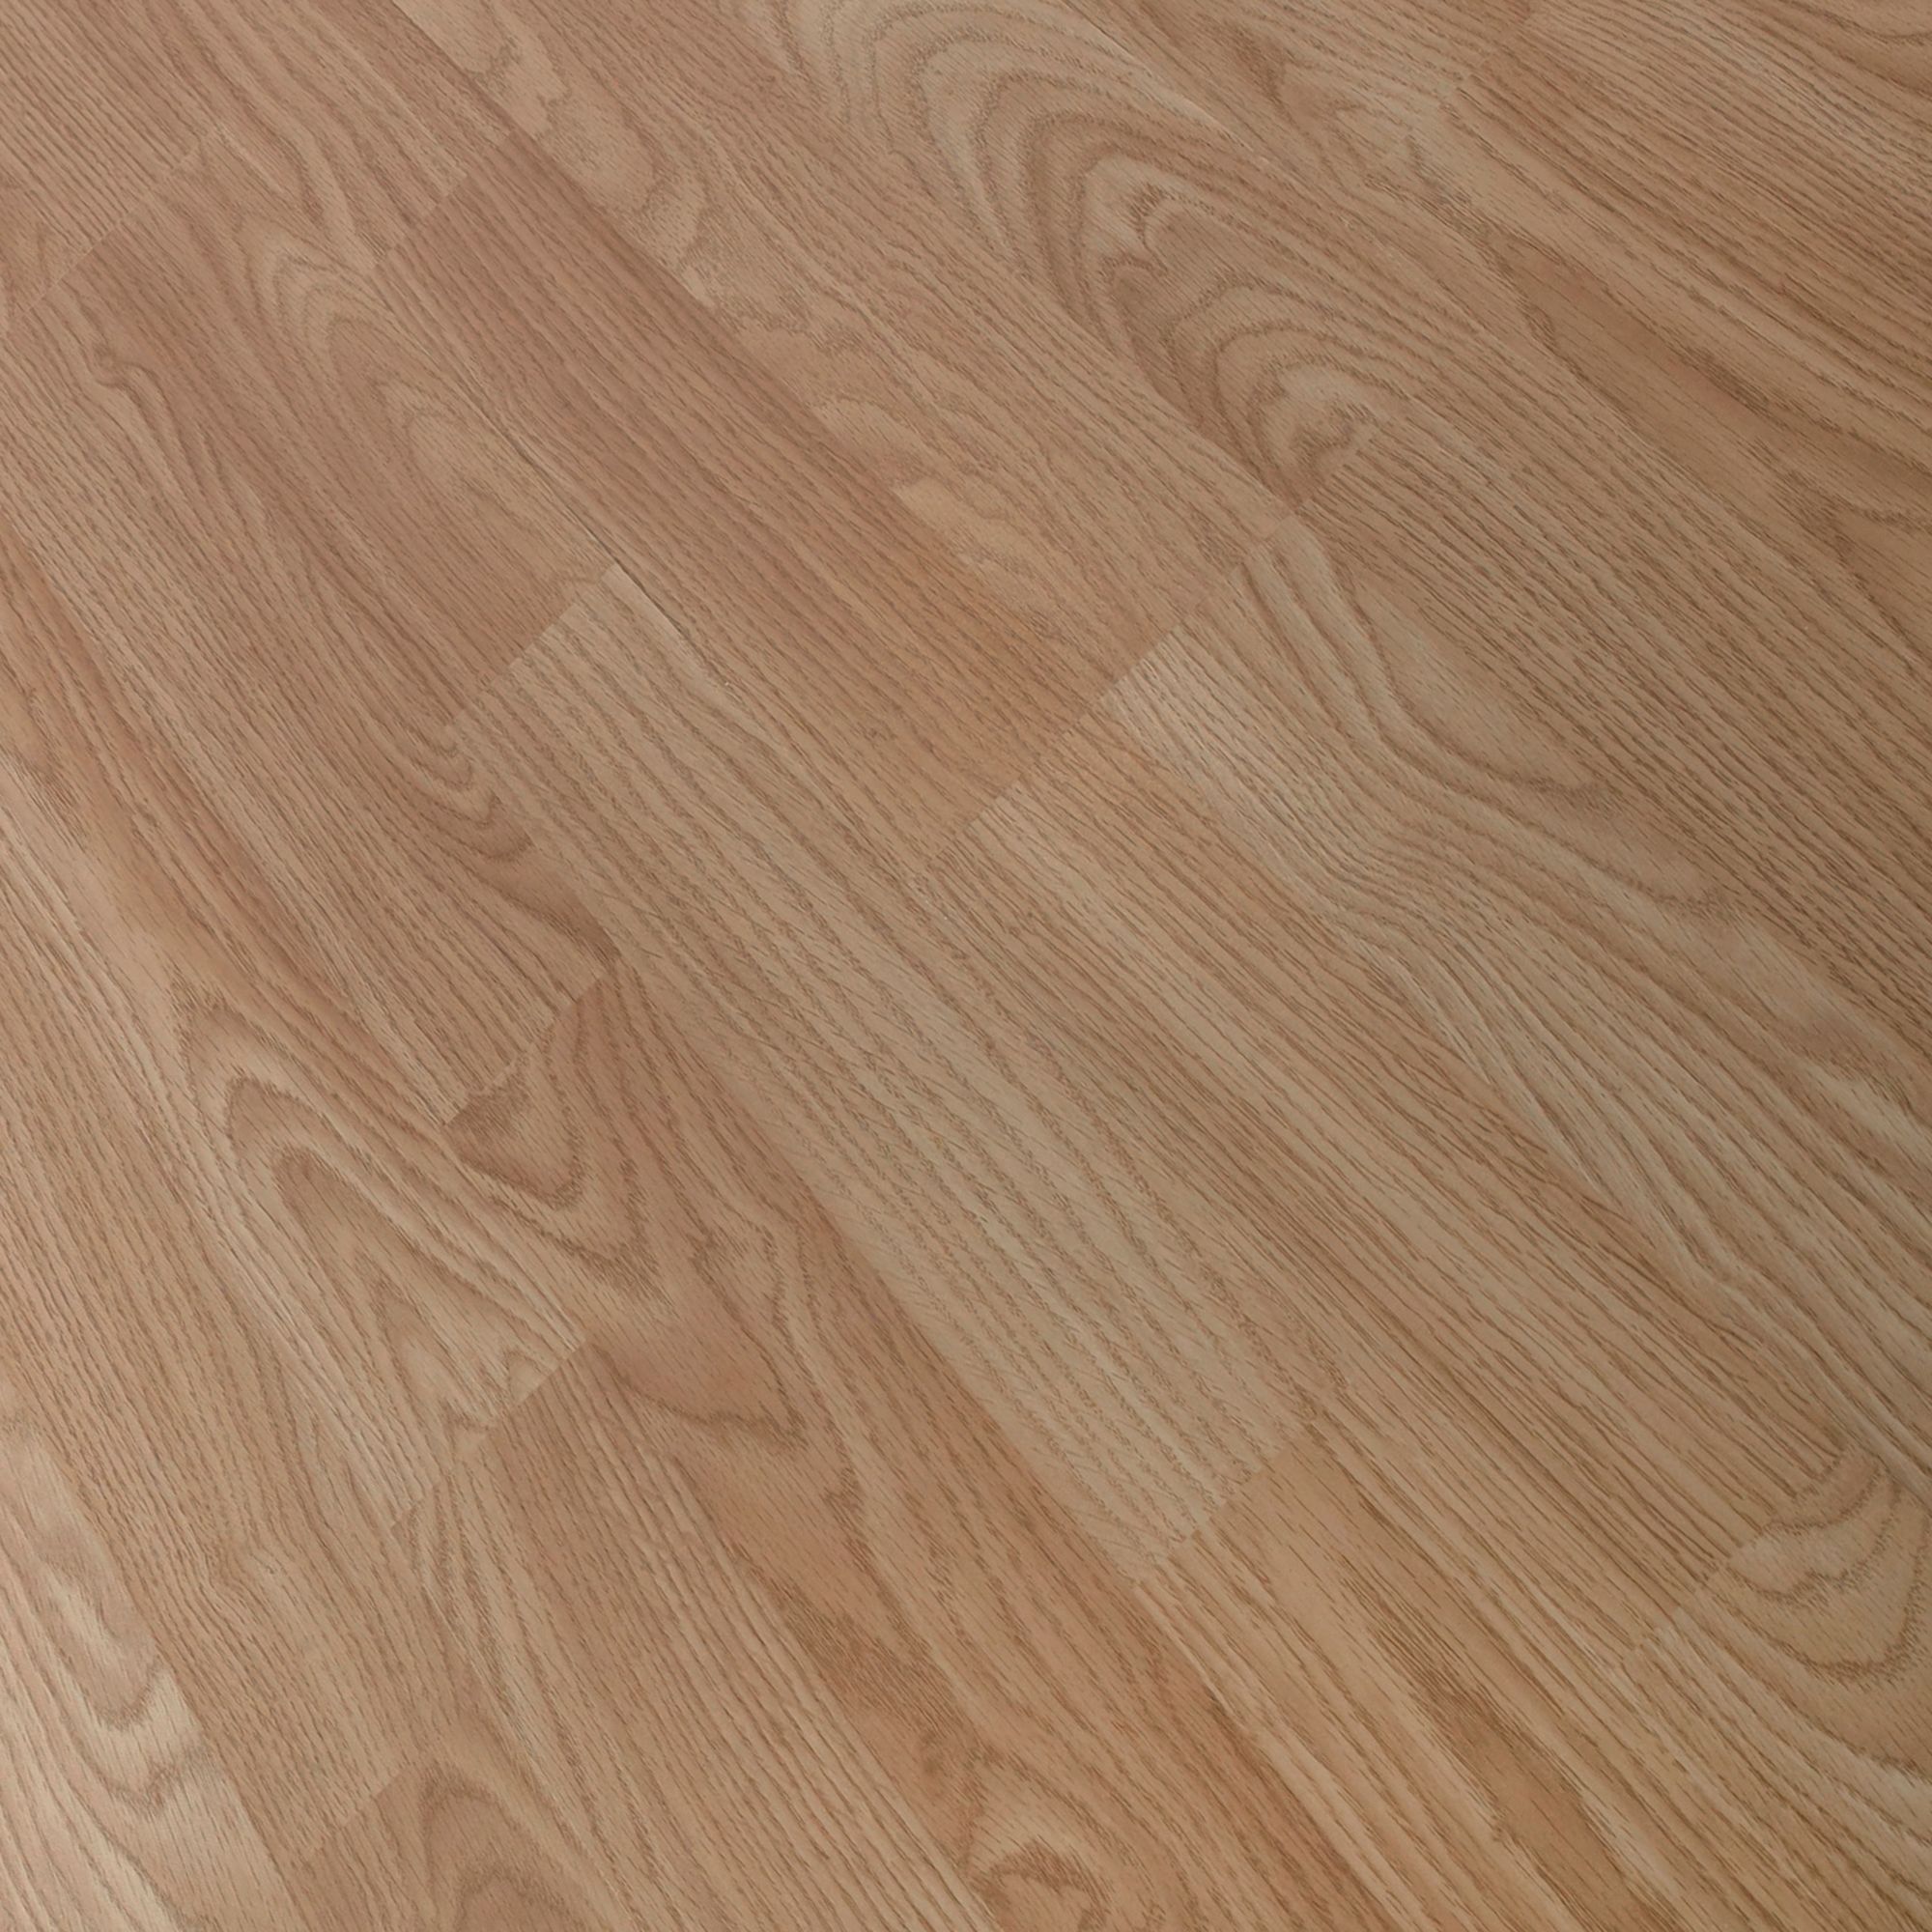 Oak Effect 3 Strip Laminate Flooring, Natural Oak Effect 3 Strip Laminate Flooring